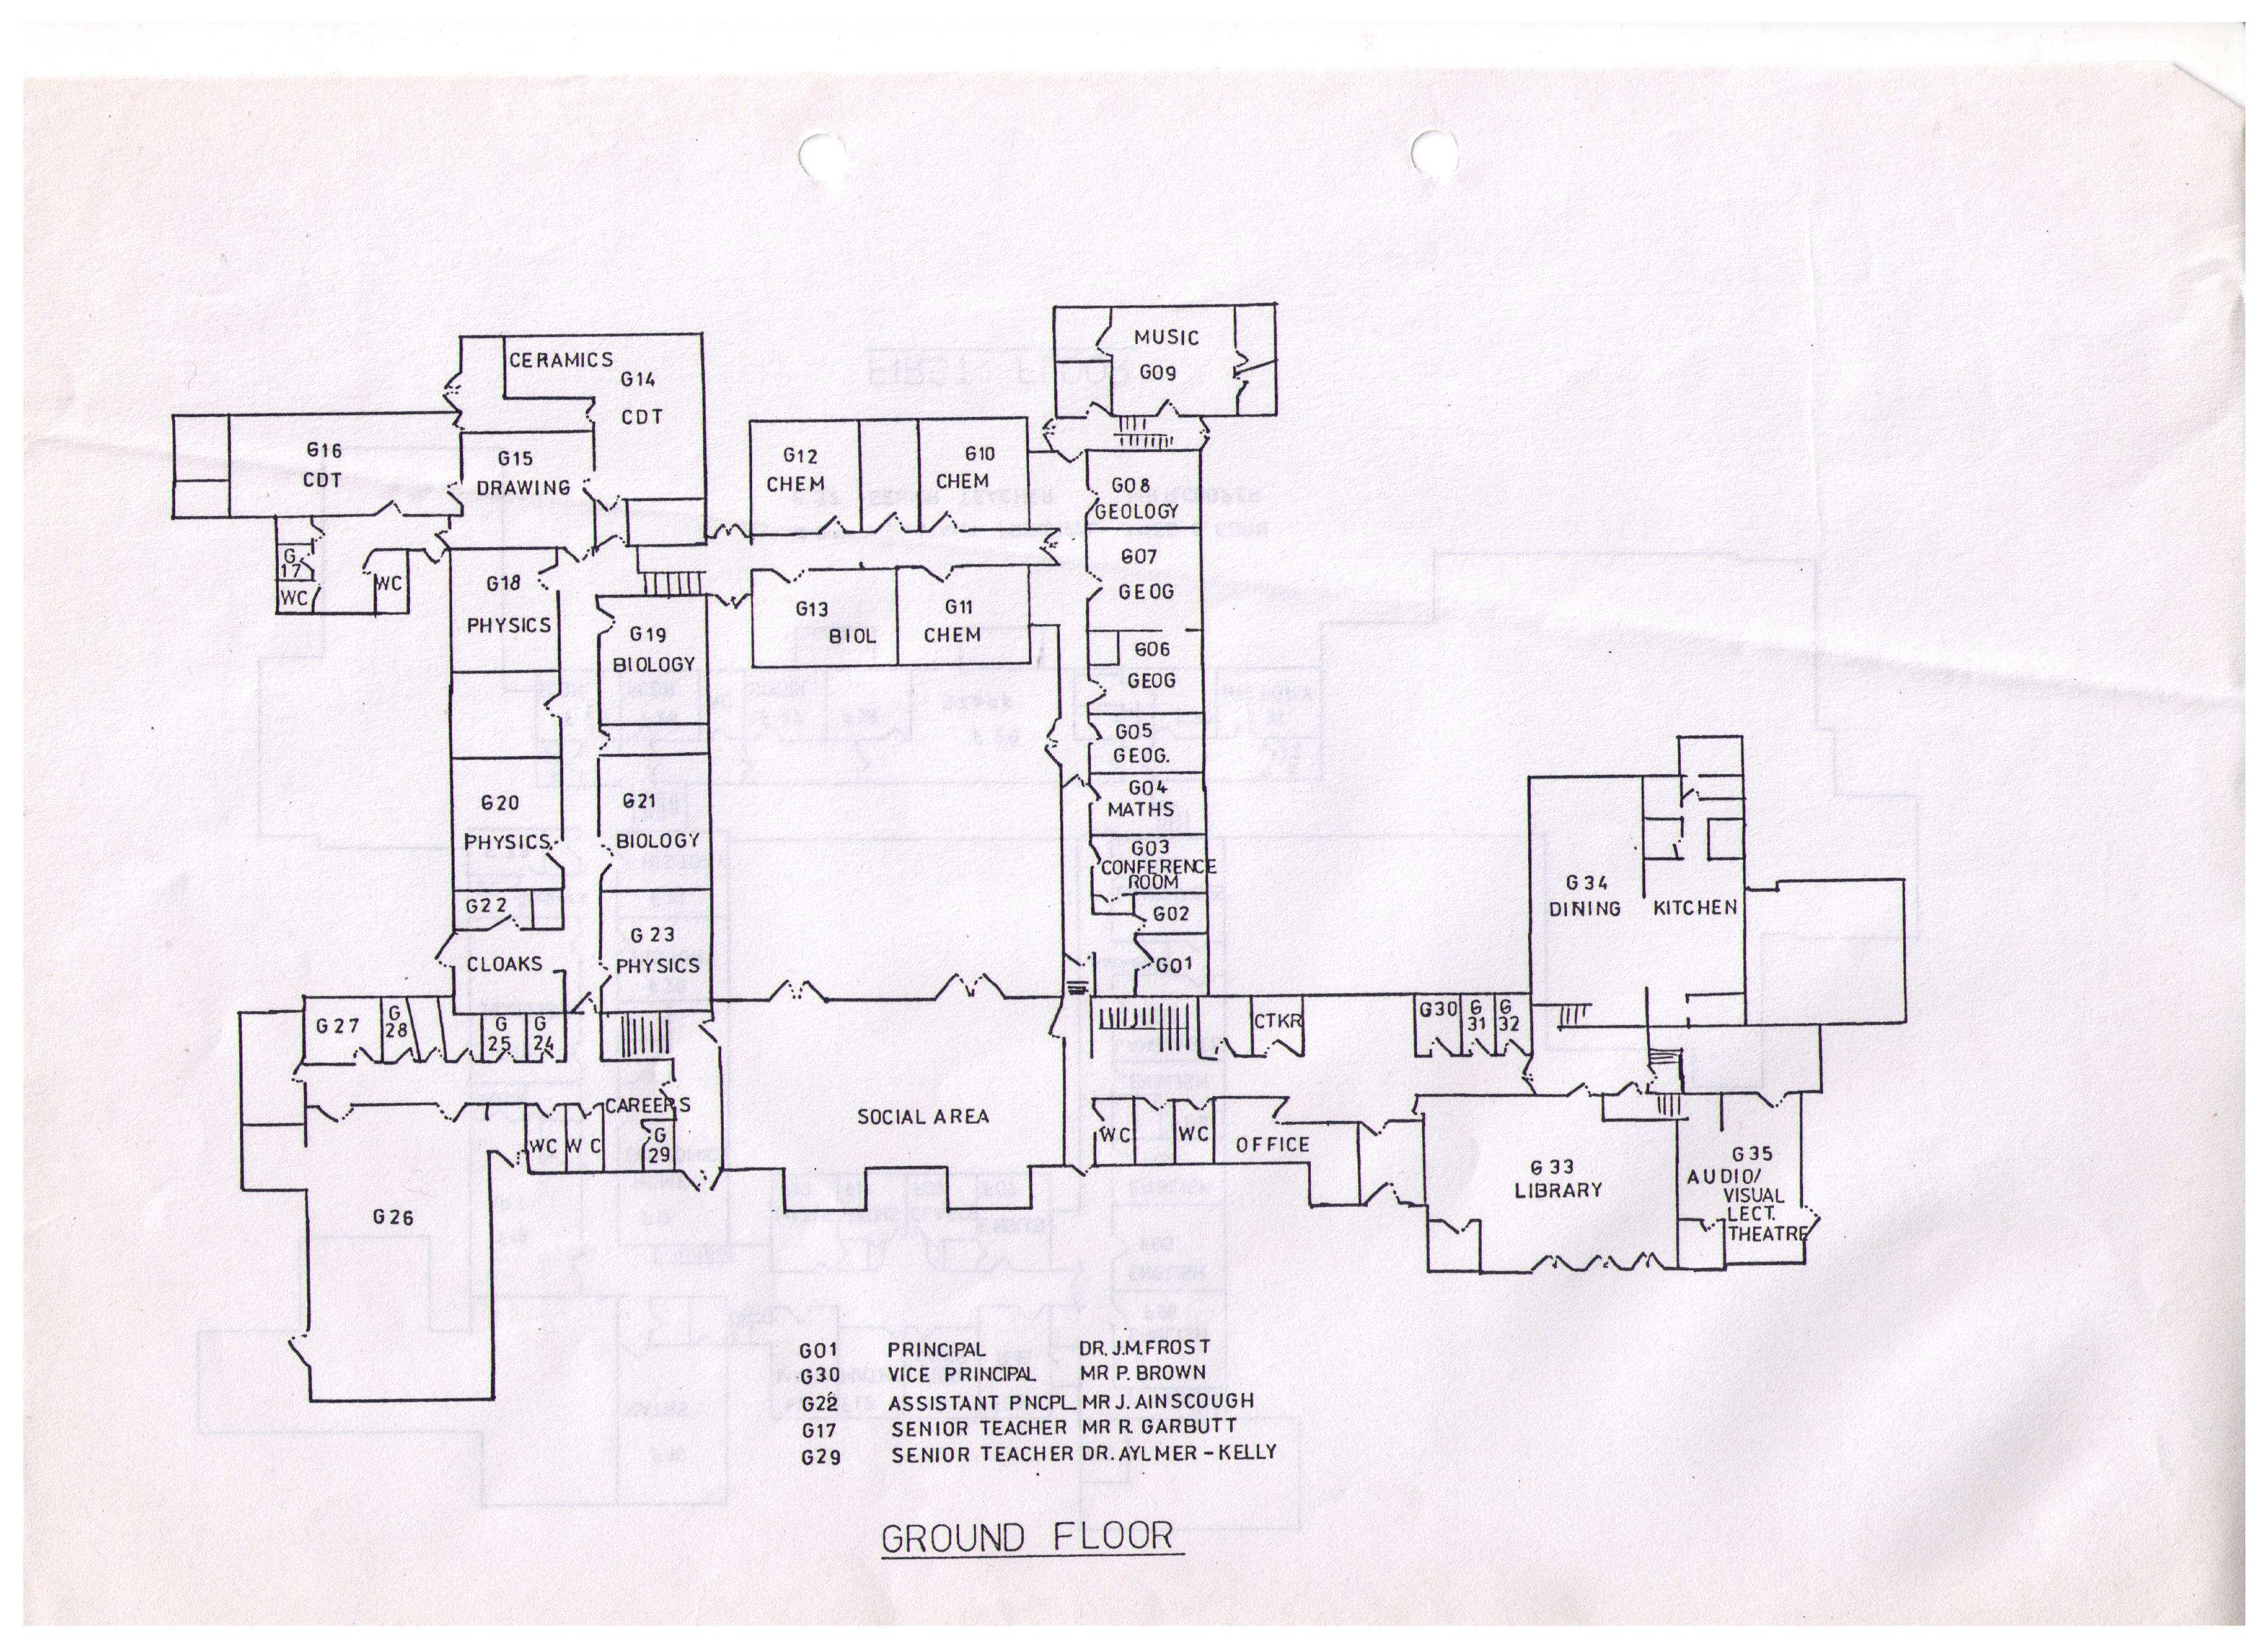 sixth-form-college-ground-floor-plan-1985